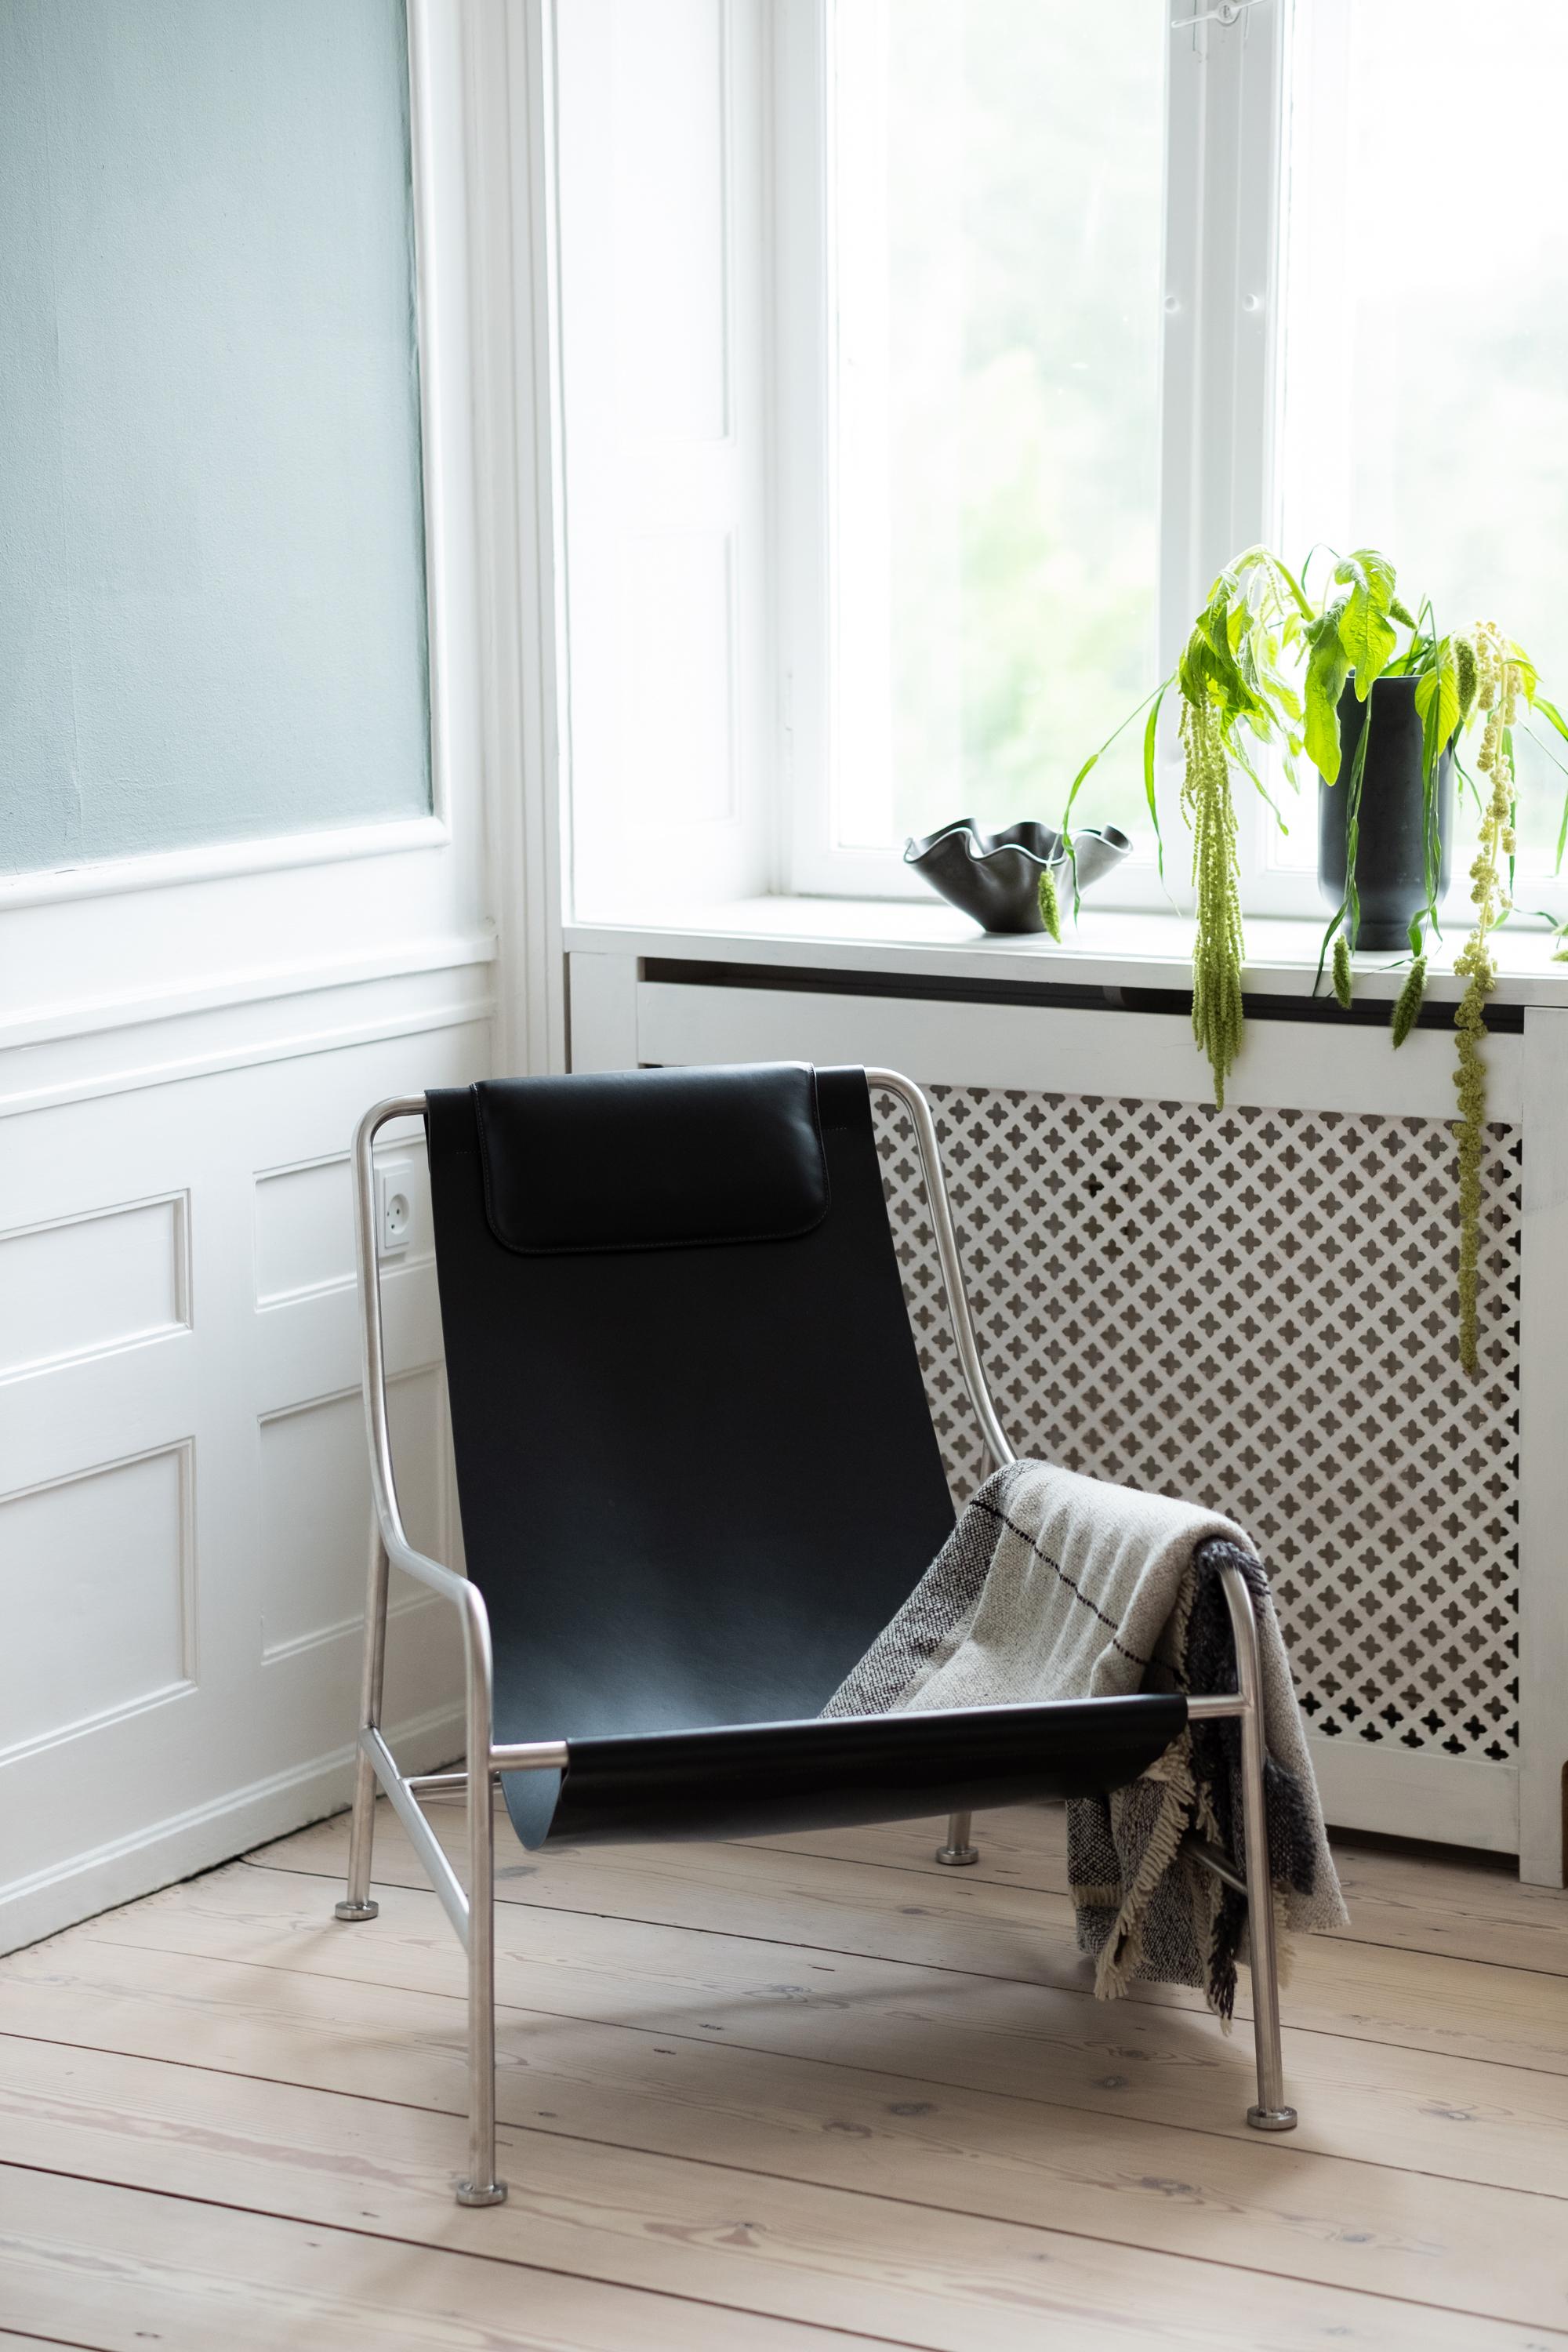 minimalist lounge chair